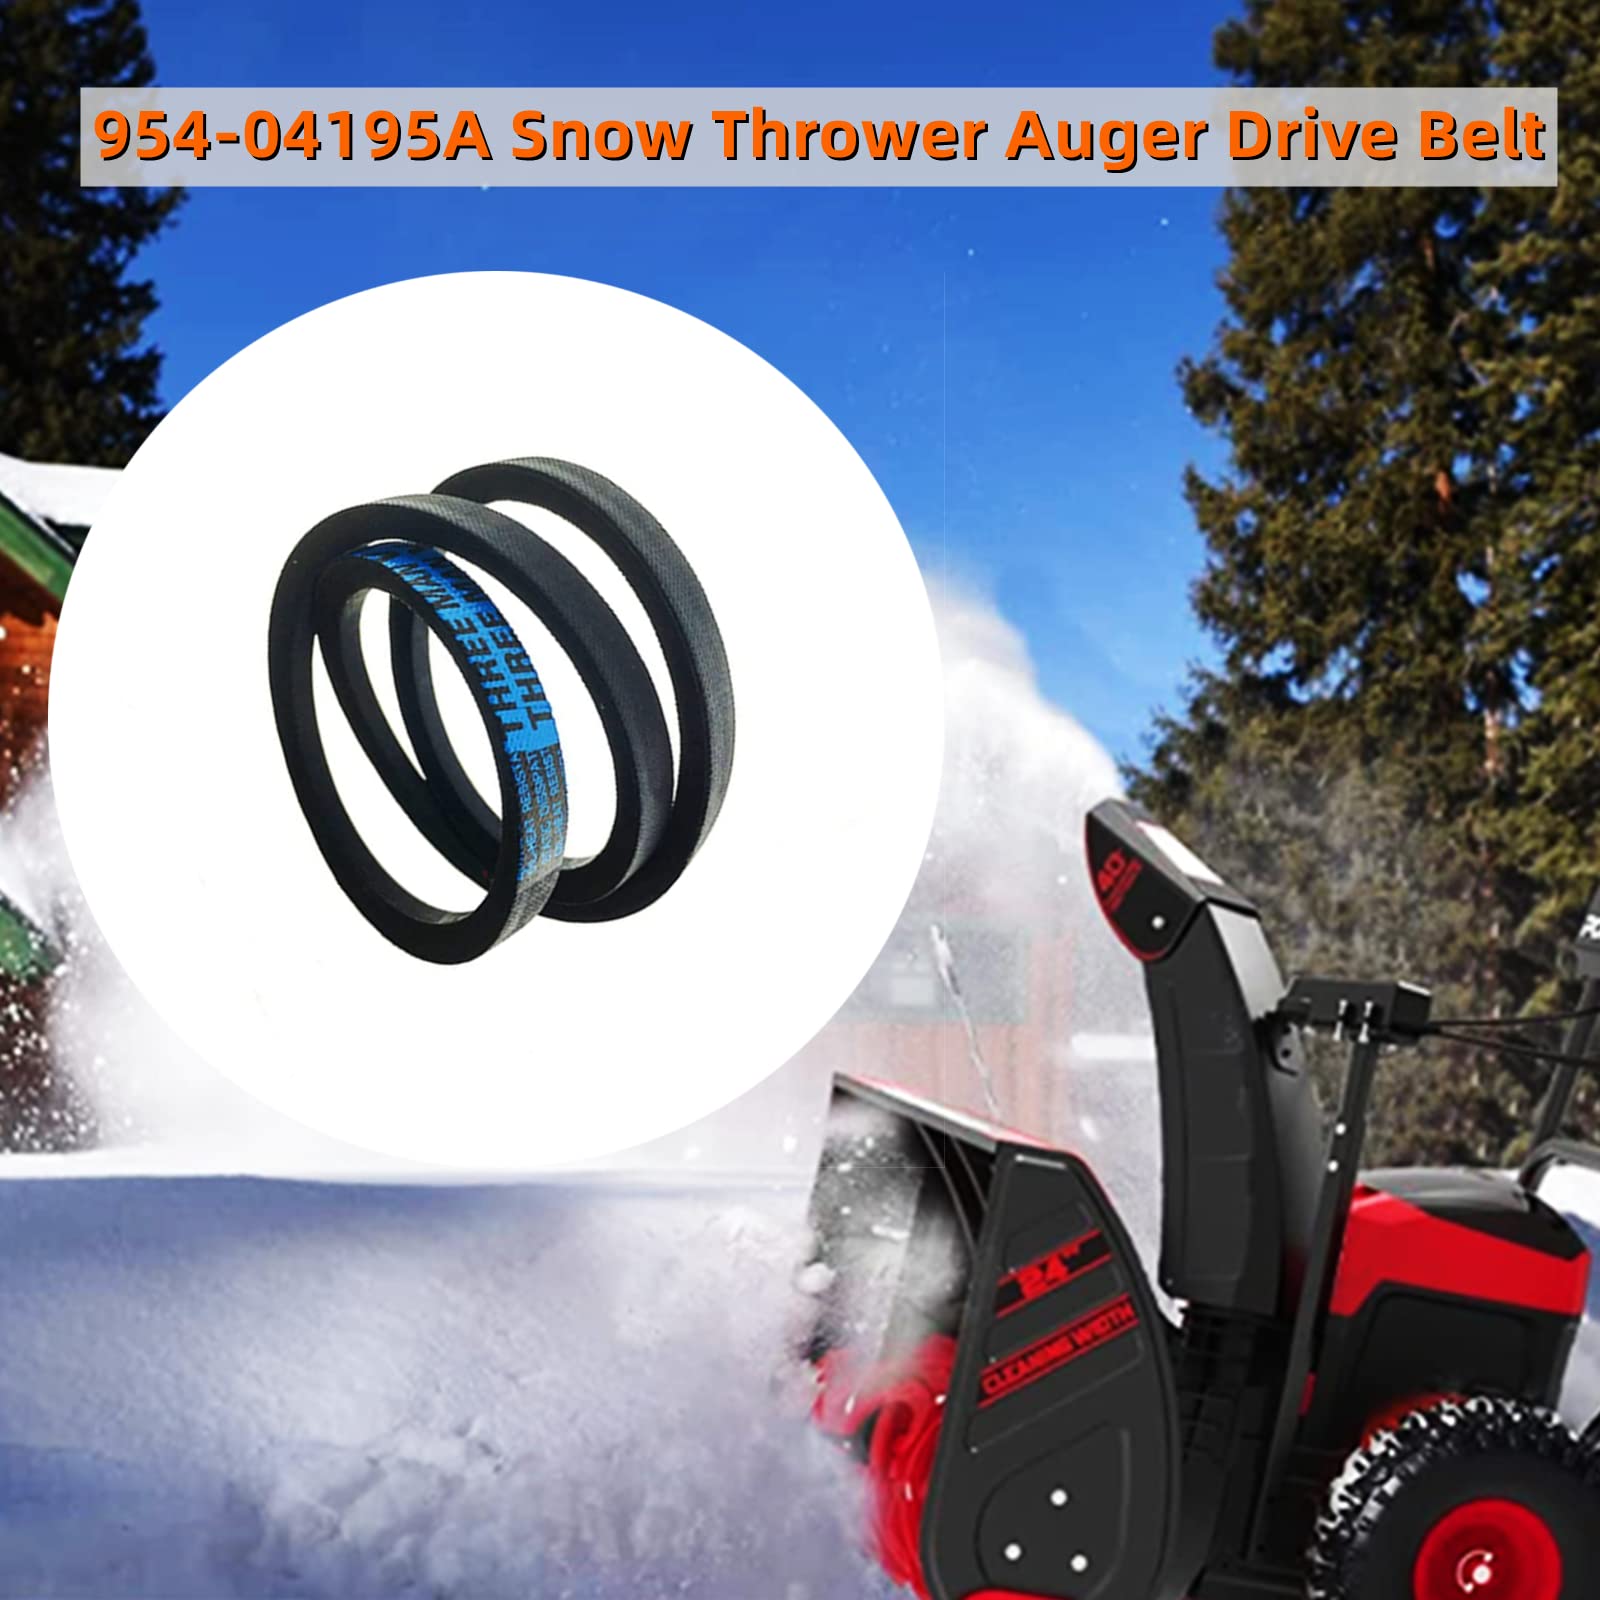 ZLIANGQ 954-04195A 754-04195 Snow Thrower Auger Drive Belt for MTD Troy Bilt Cub Cadet 26" 3 Stage Snow blowers 954-04195 754-04195A (1/2" x 37")